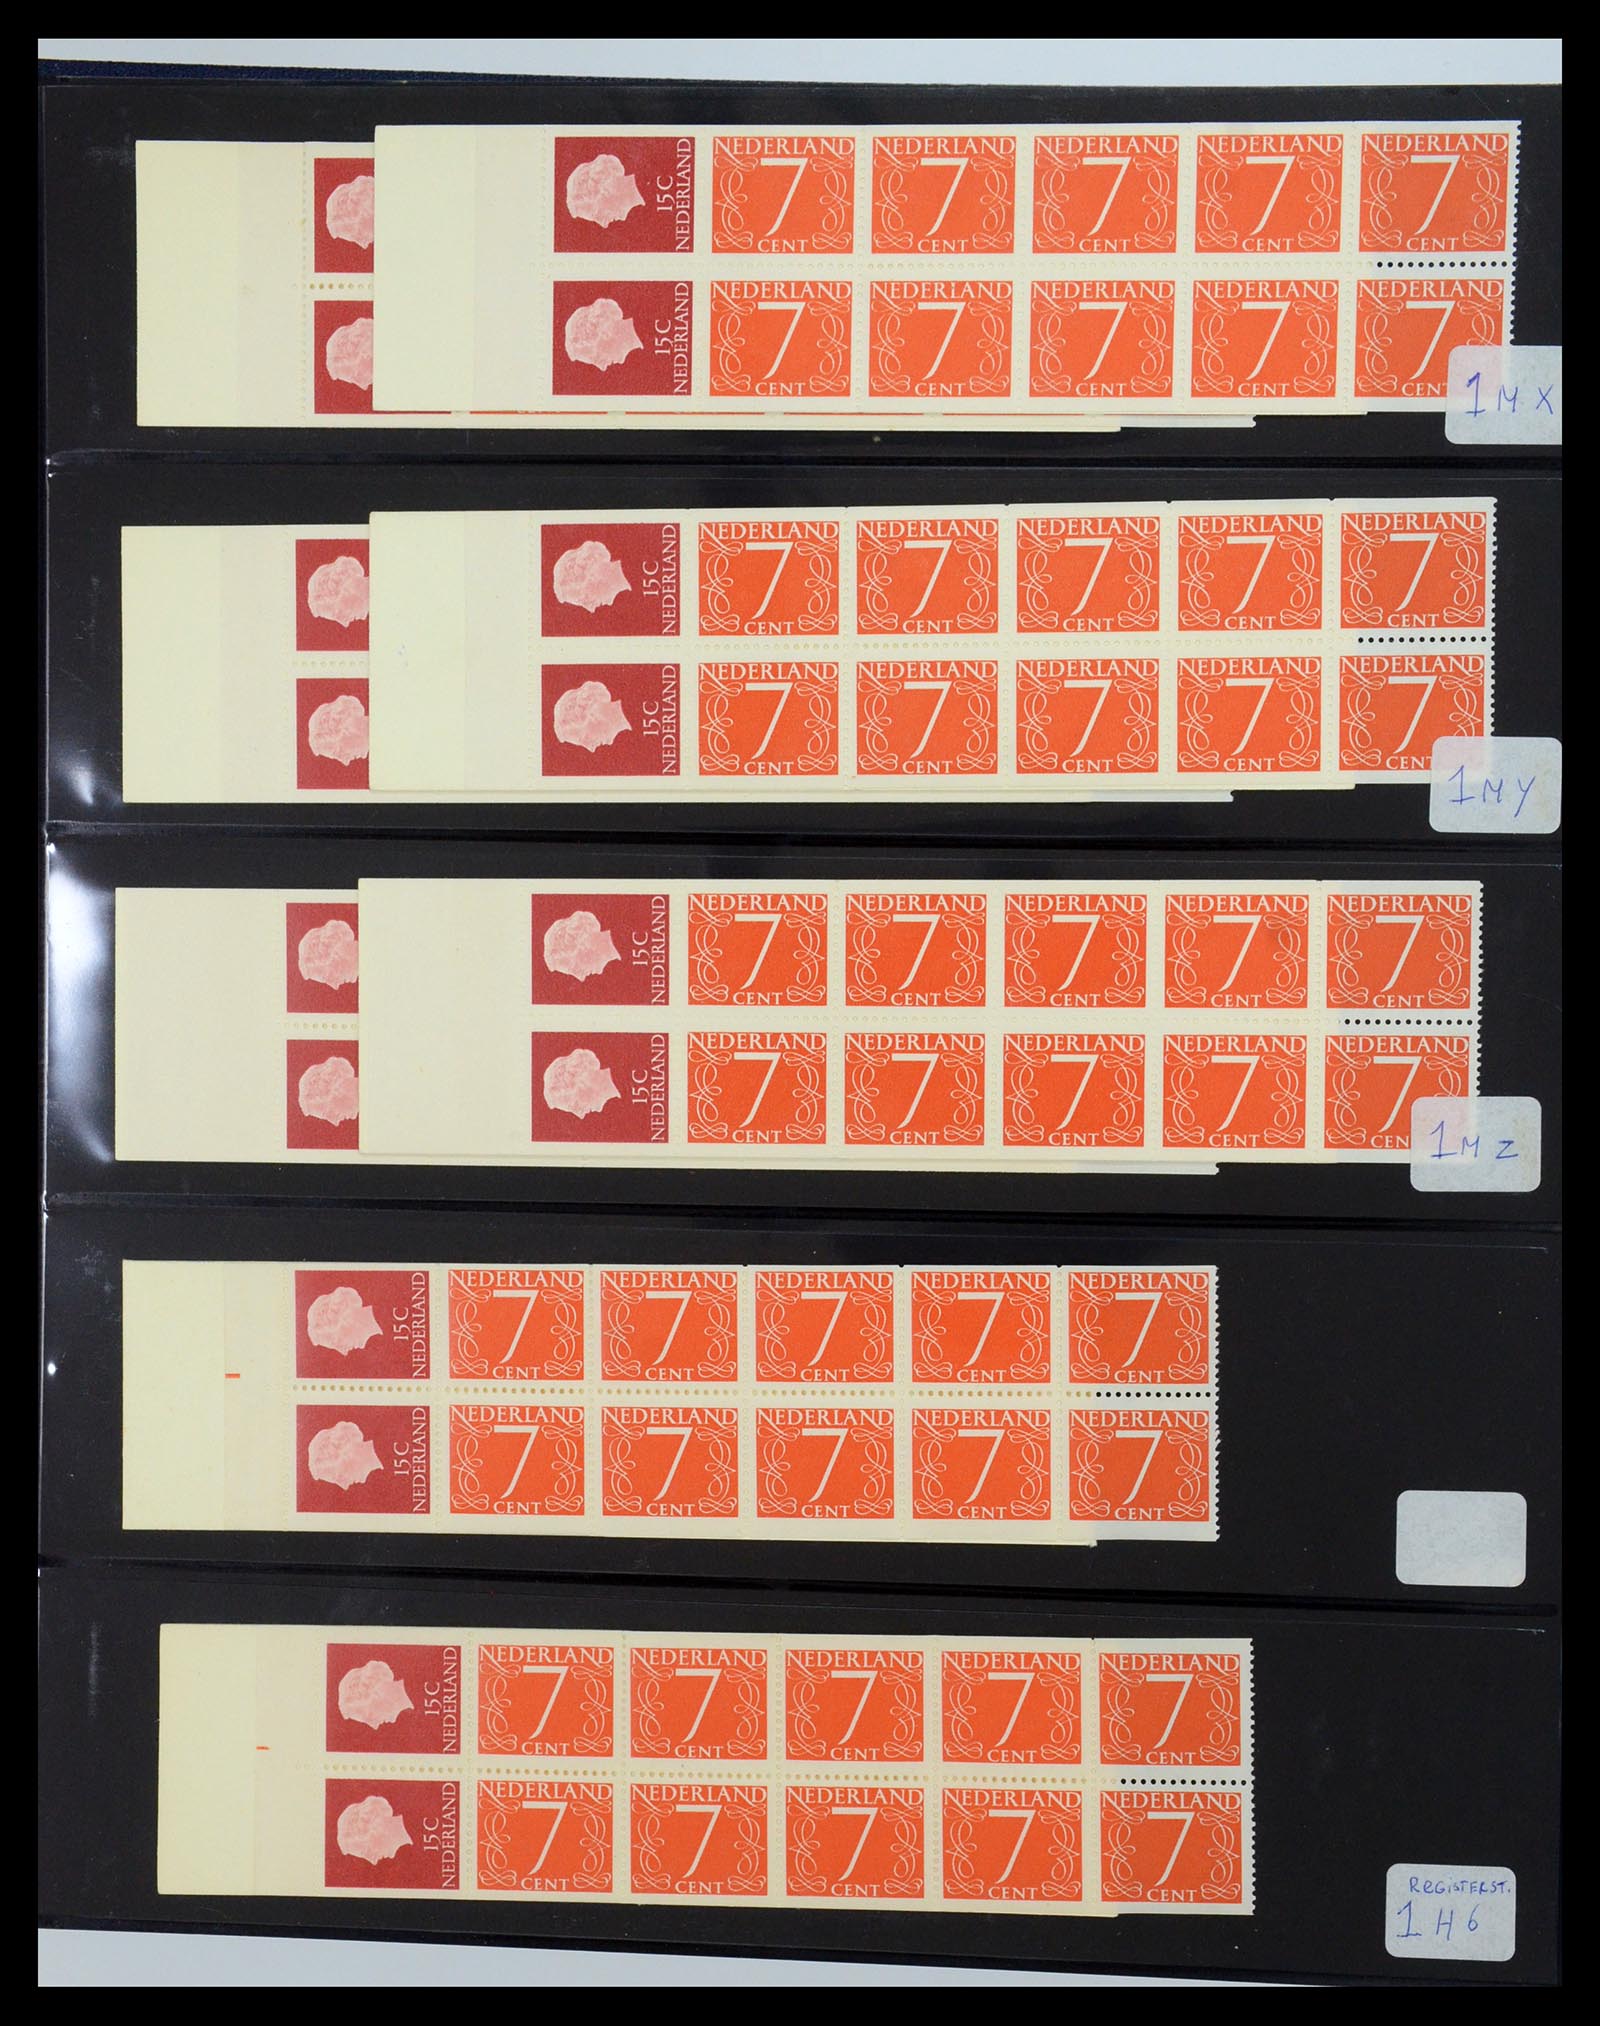 35821 003 - Stamp Collection 35821 Netherlands stamp booklets 1964-1983.